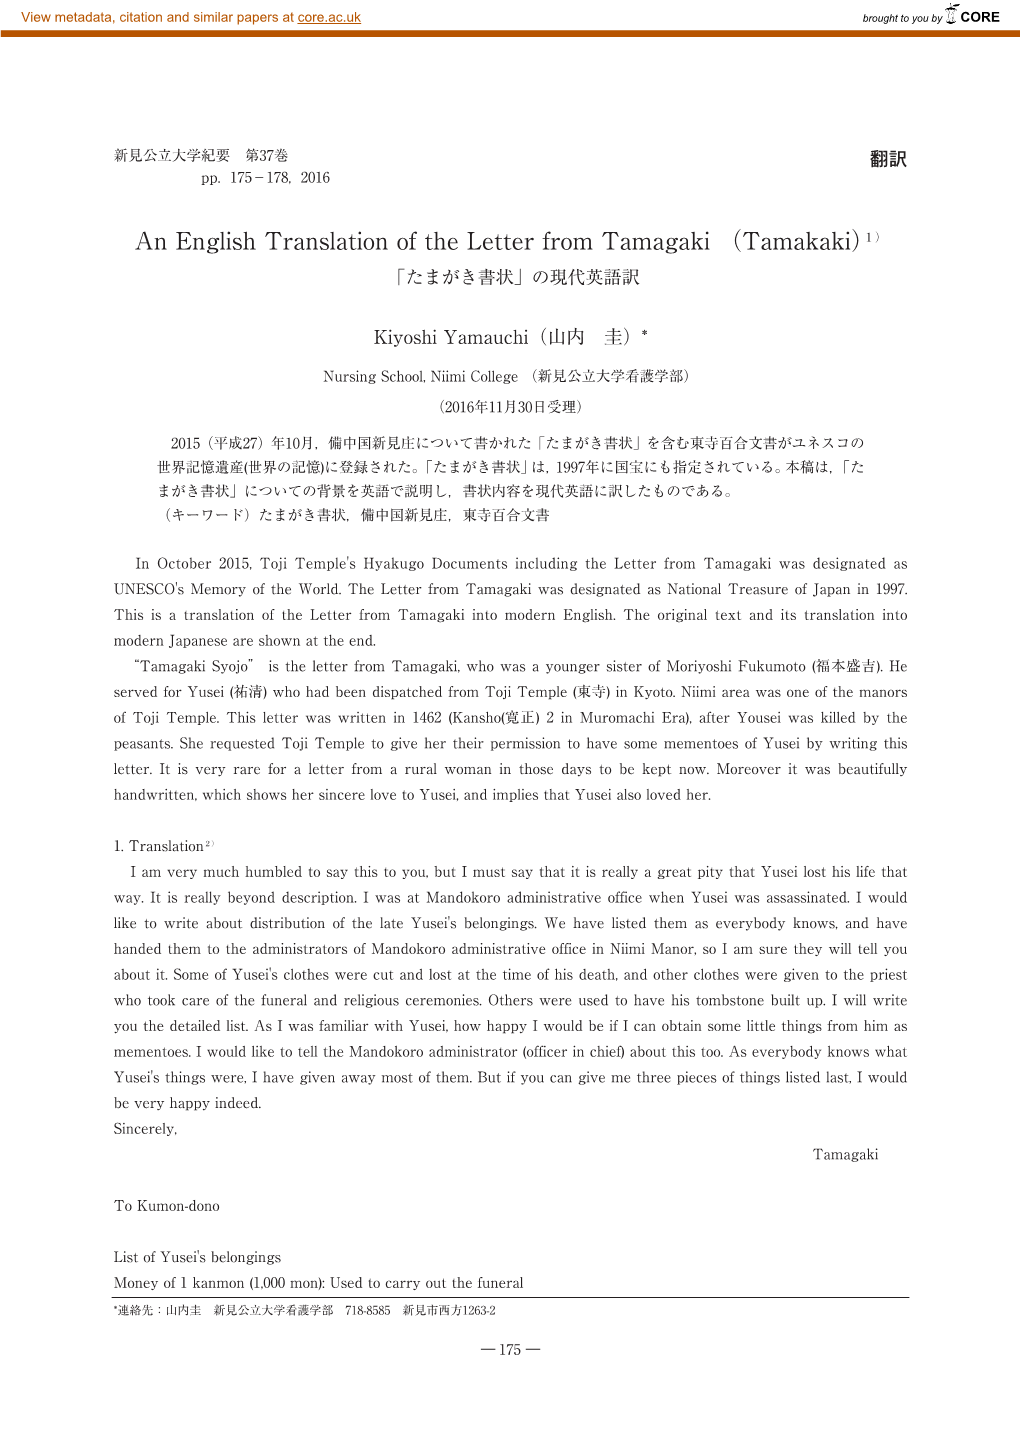 An English Translation of the Letter from Tamagaki （Tamakaki）